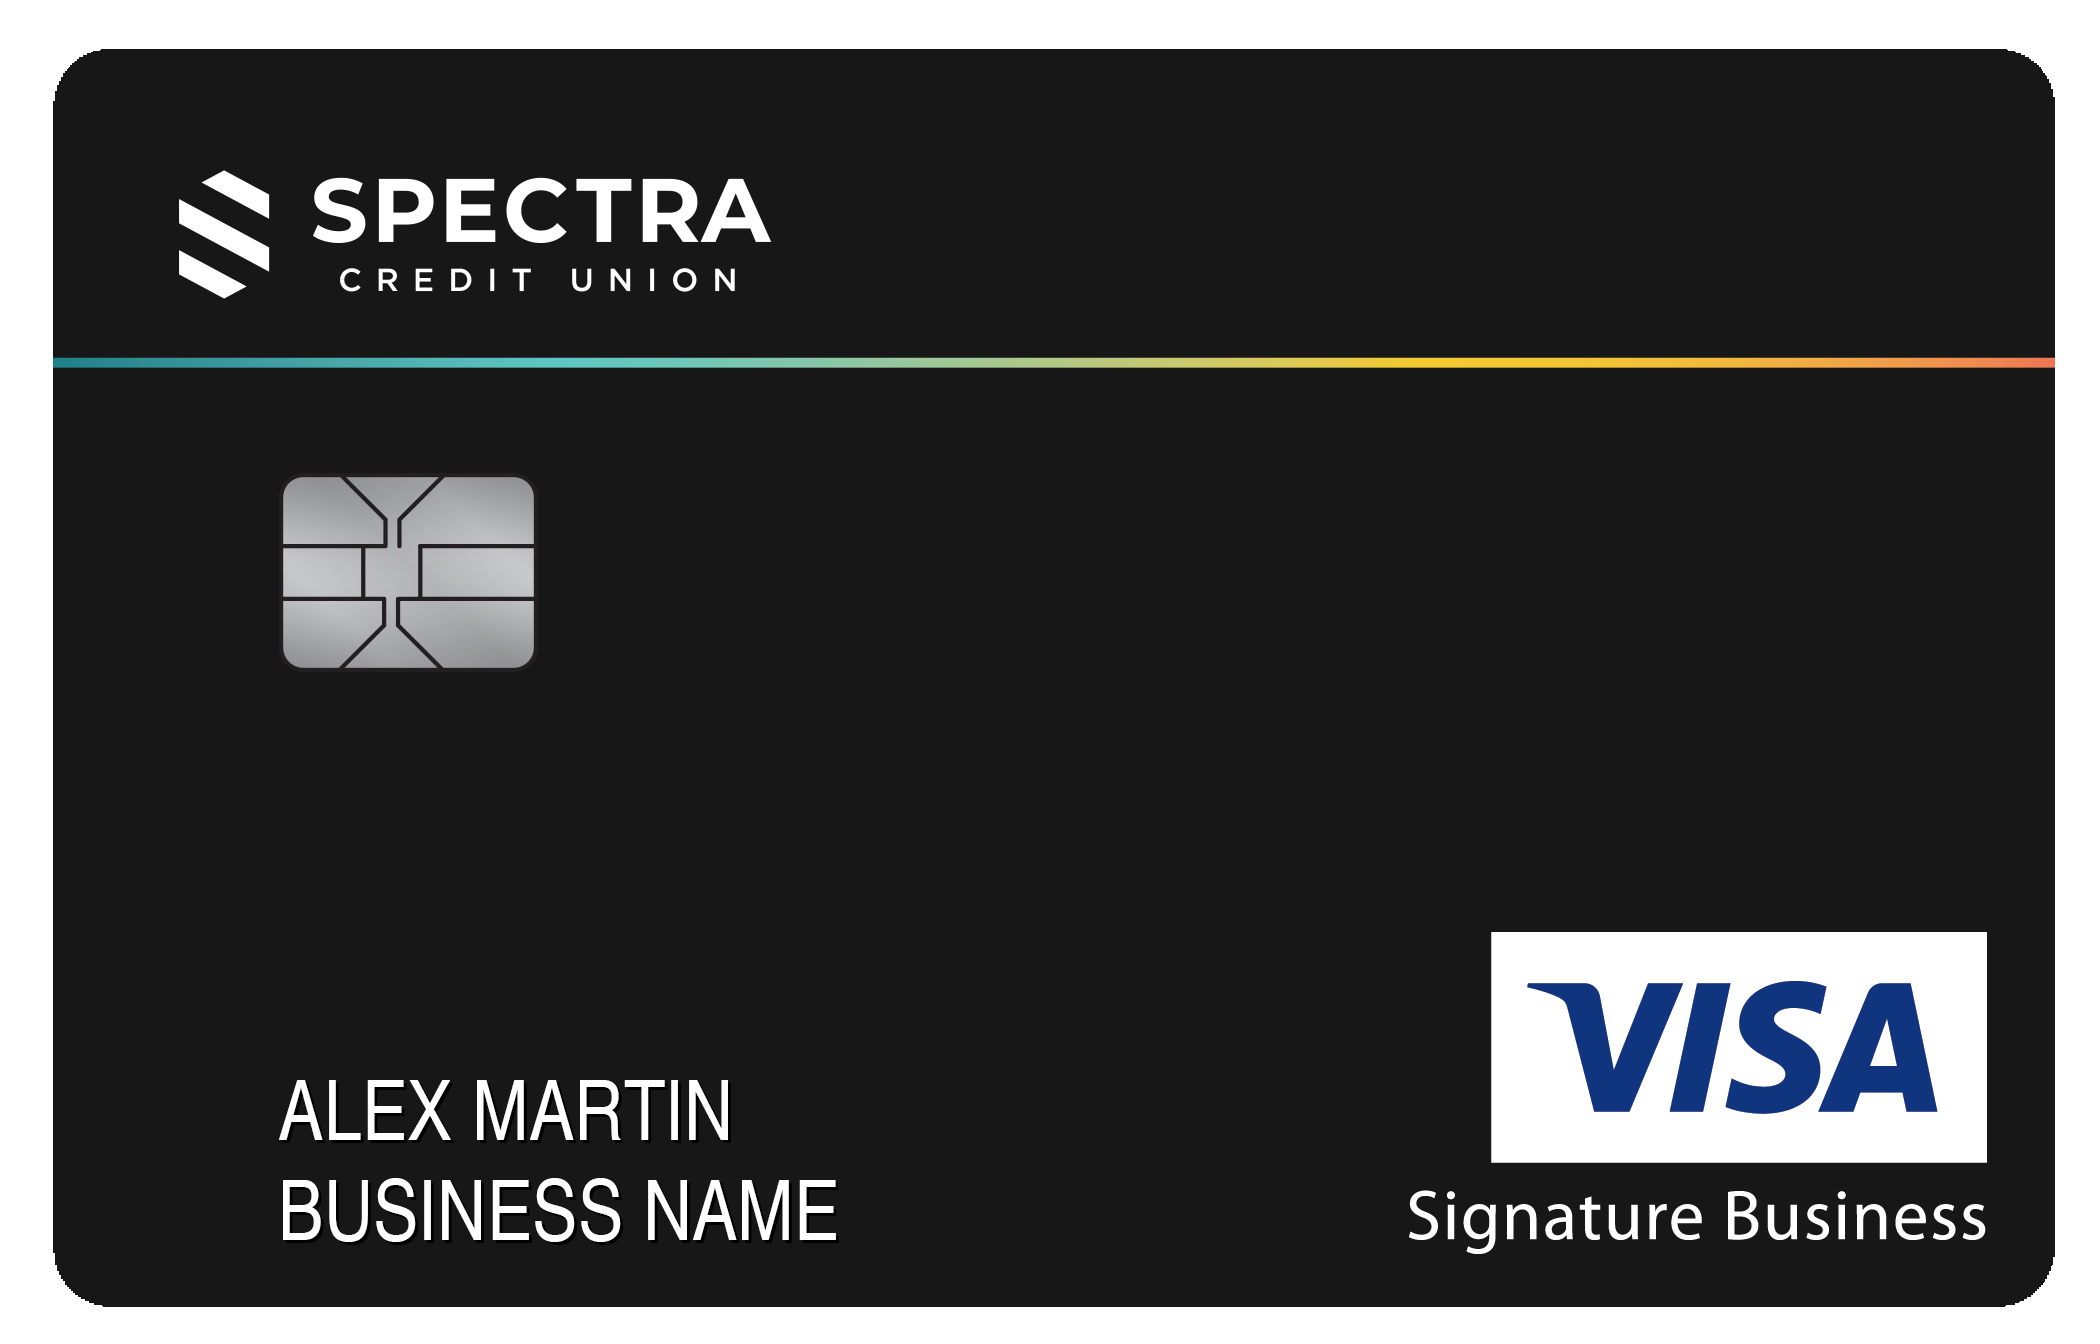 Spectra Credit Union Smart Business Rewards Card